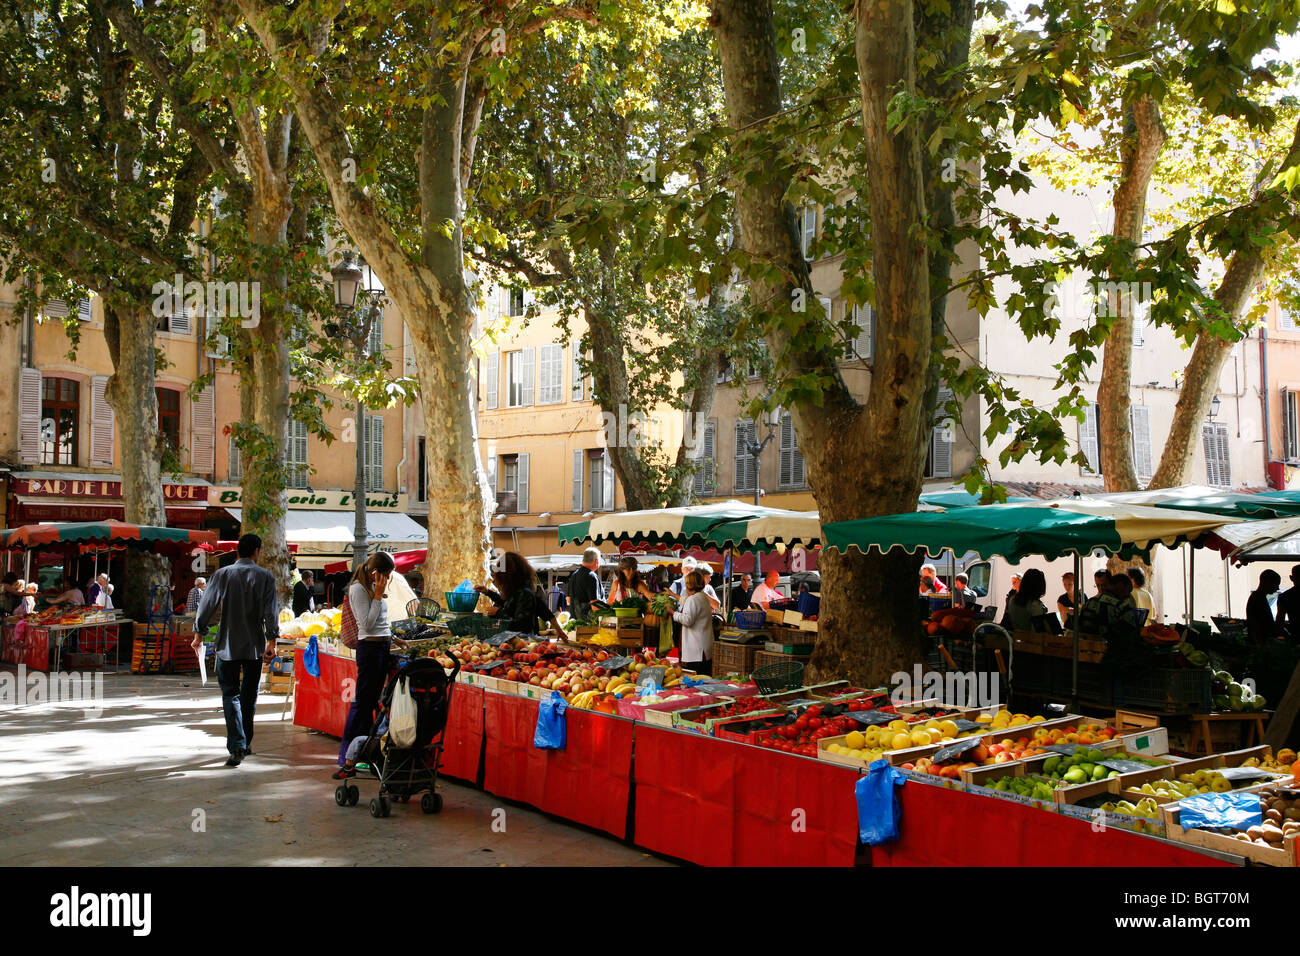 Market at Place Richelme in Vieil Aix the old quarter of Aix en Provence, Bouches du Rhone, Provence, France. Stock Photo